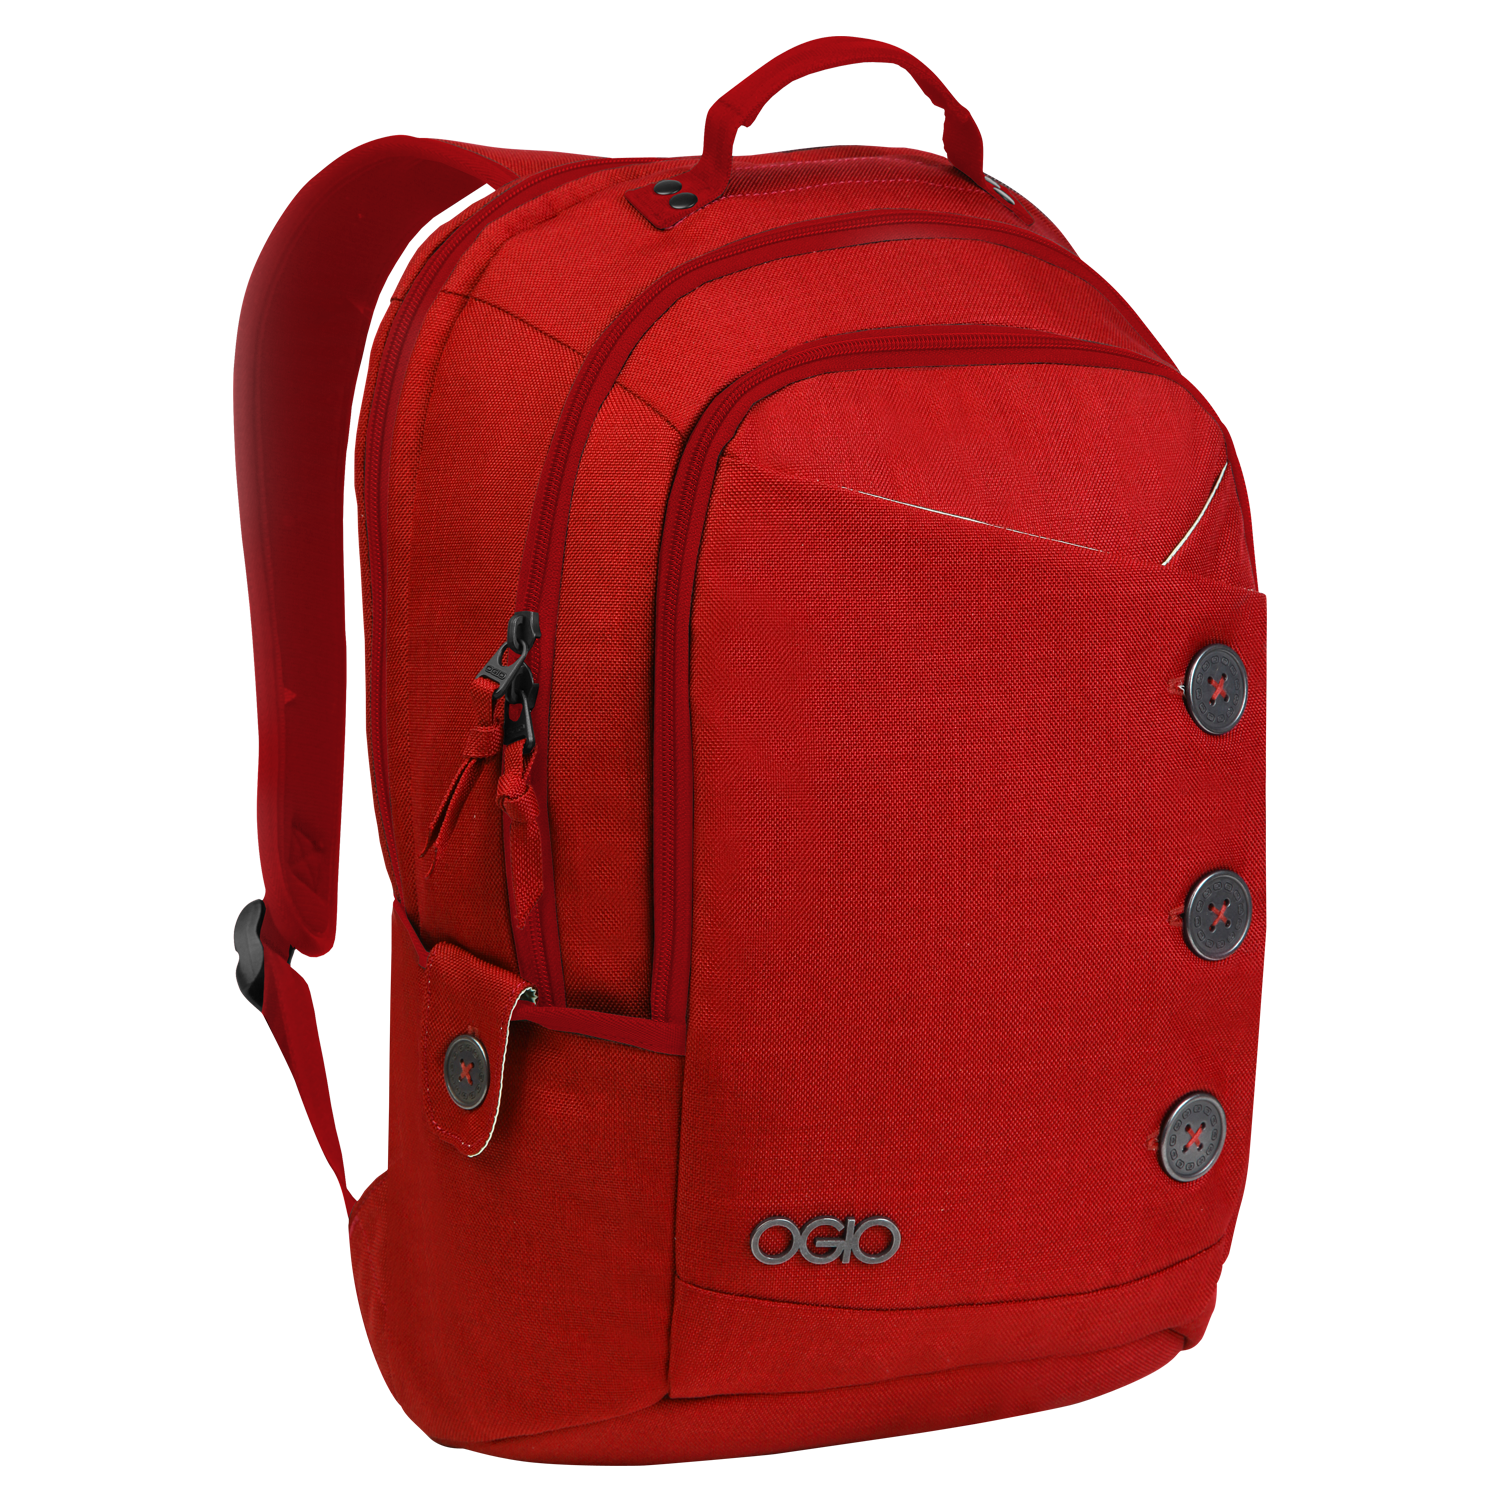 Backpack clipart laptop bag. Png images free download